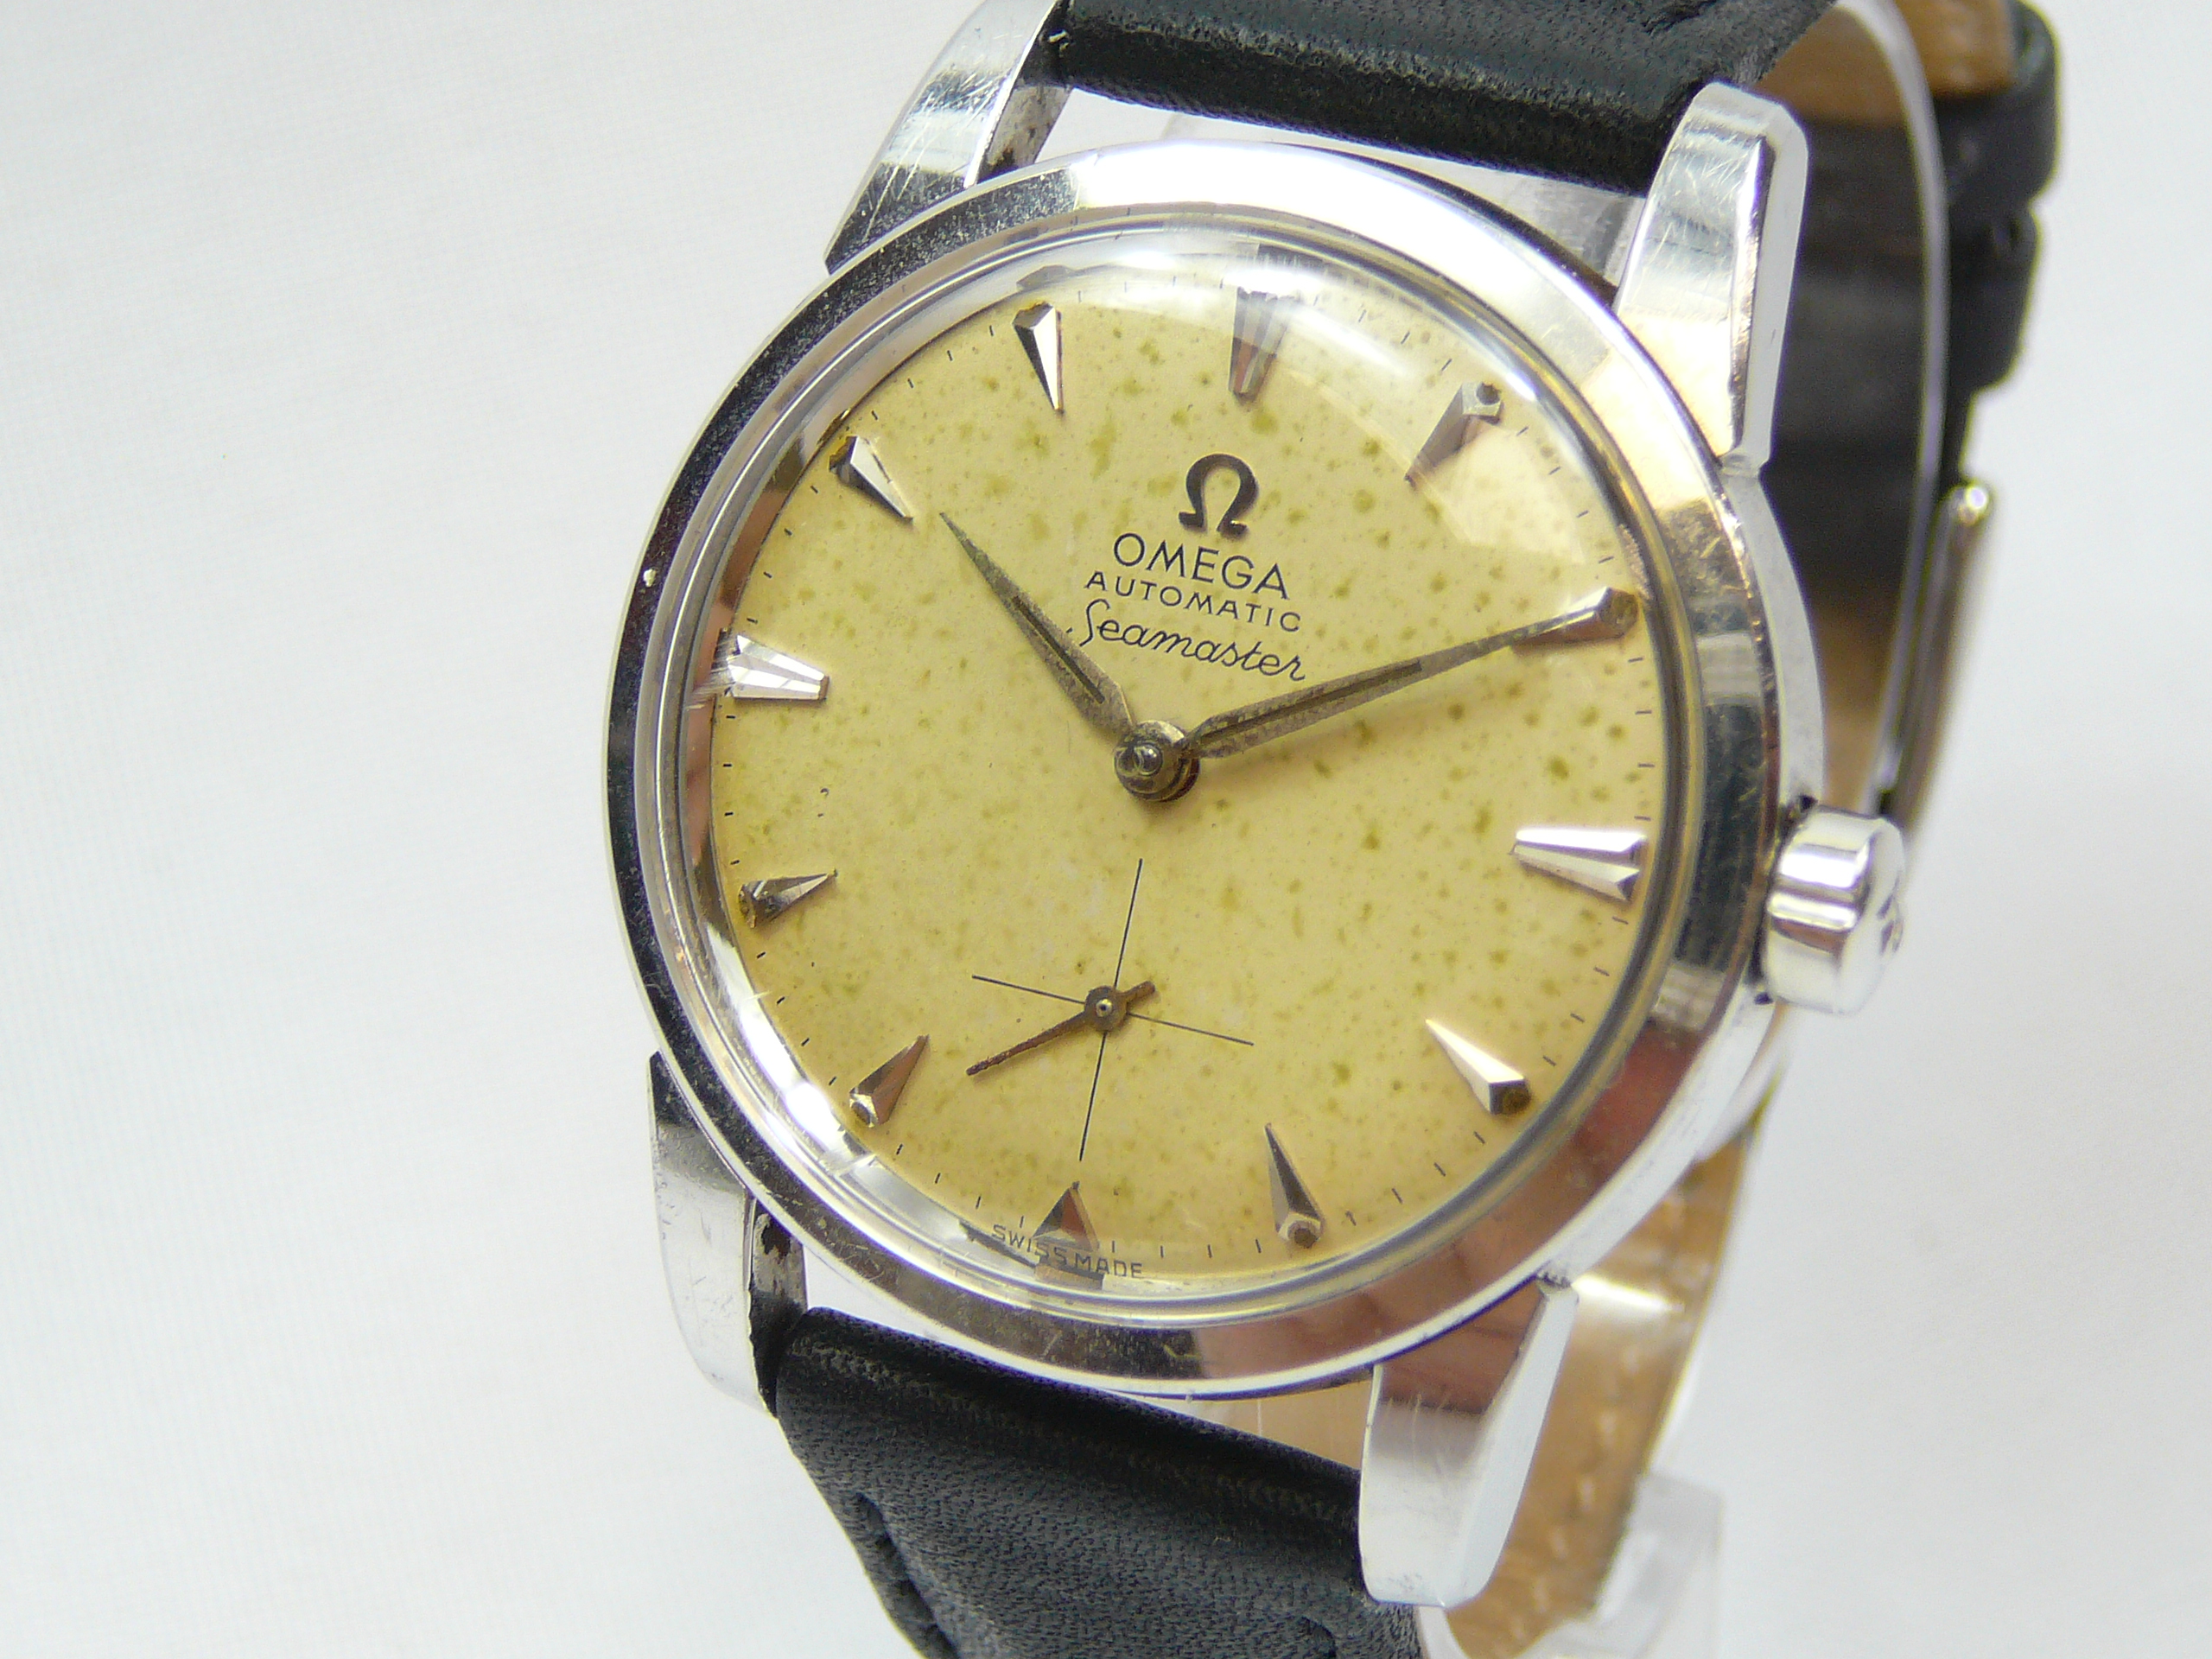 Gents Vintage Omega Wrist Watch - Image 2 of 3